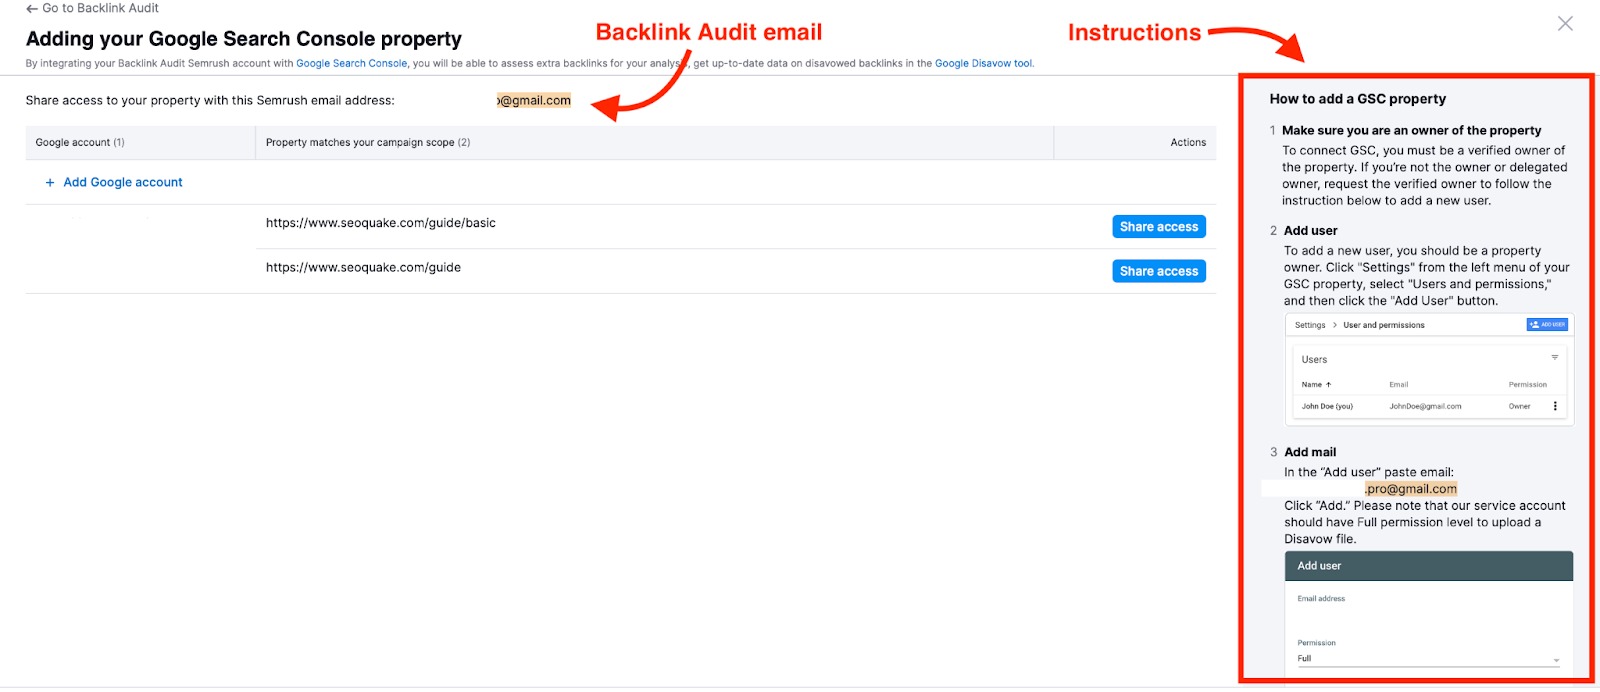 Connecter Backlink Audit aux comptes Google image 4